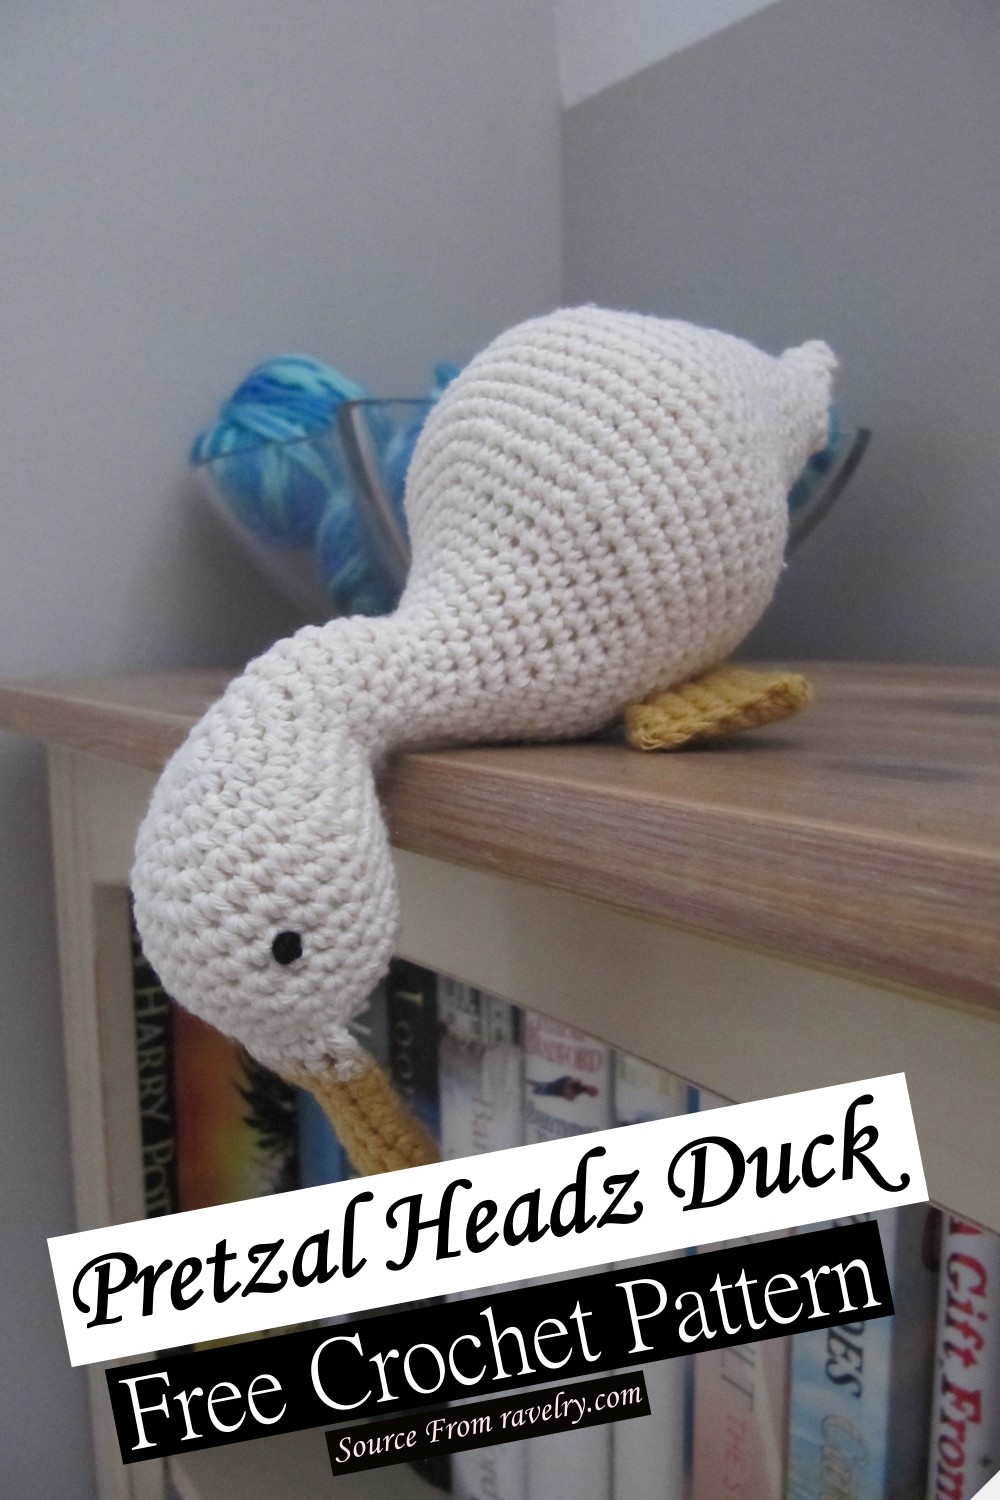 Free Crochet Pretzal Headz Duck Pattern